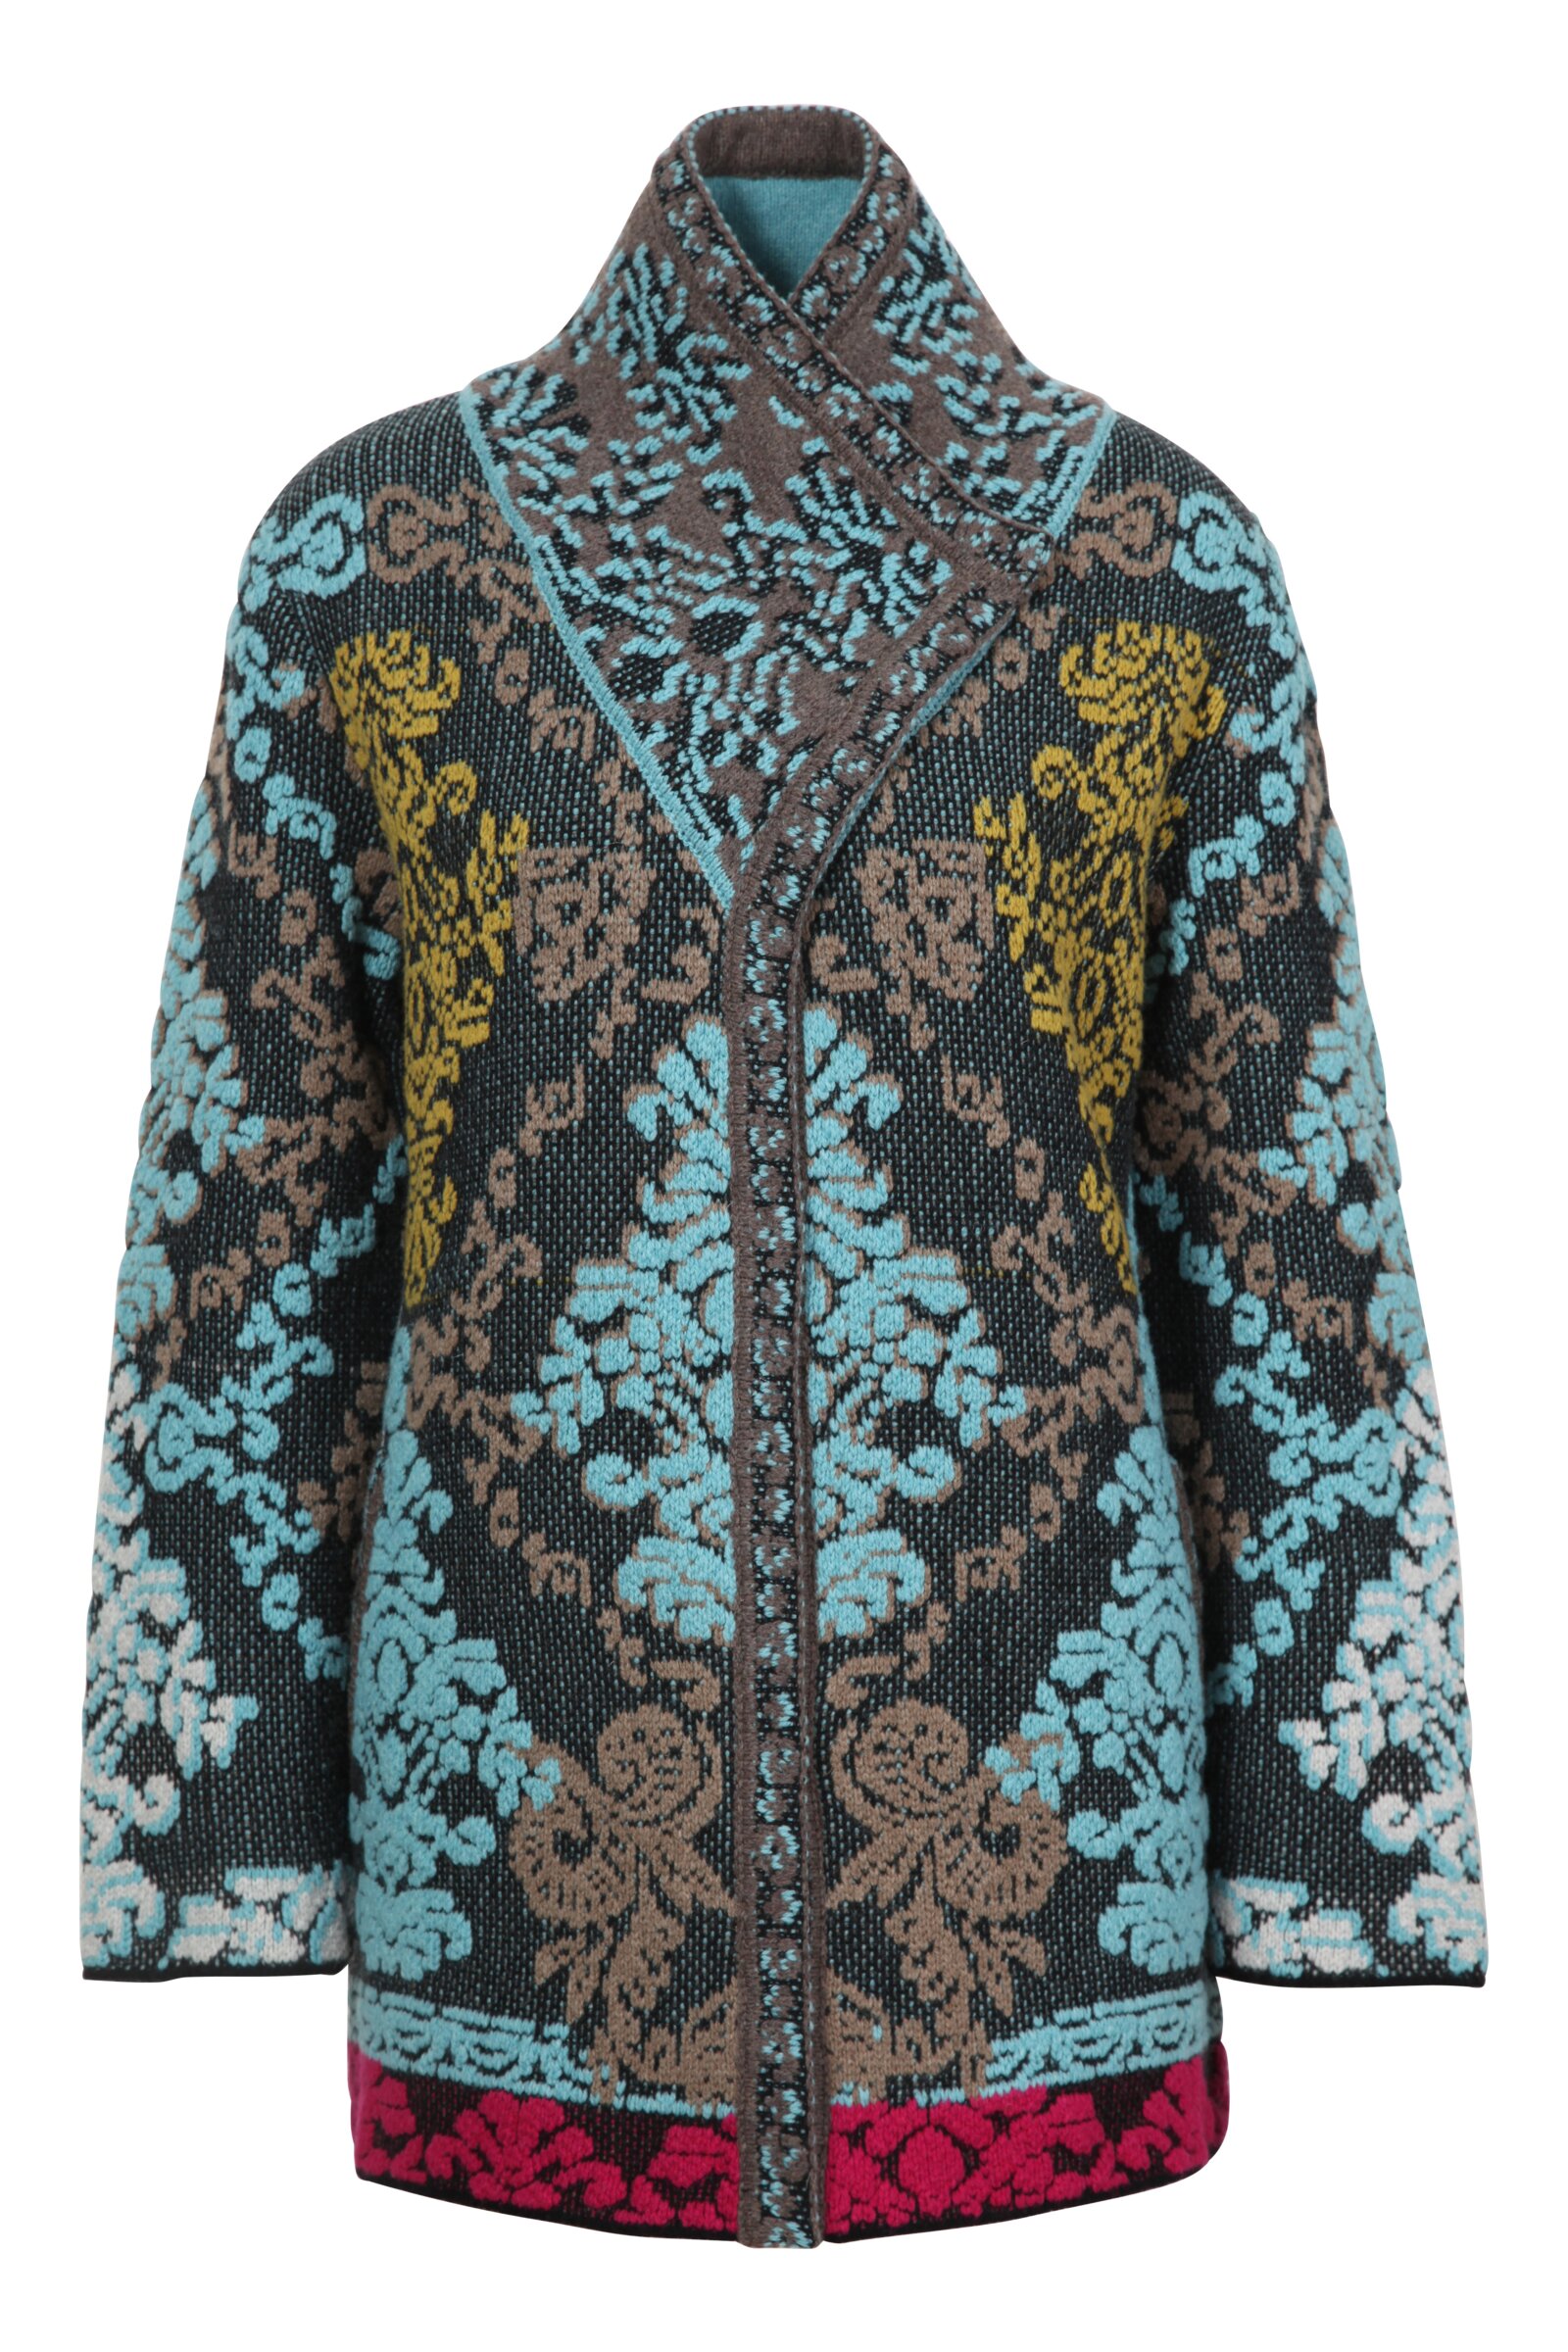 Jacket, Brocade Floral Pattern - Black - Outerwear - Ivko Woman